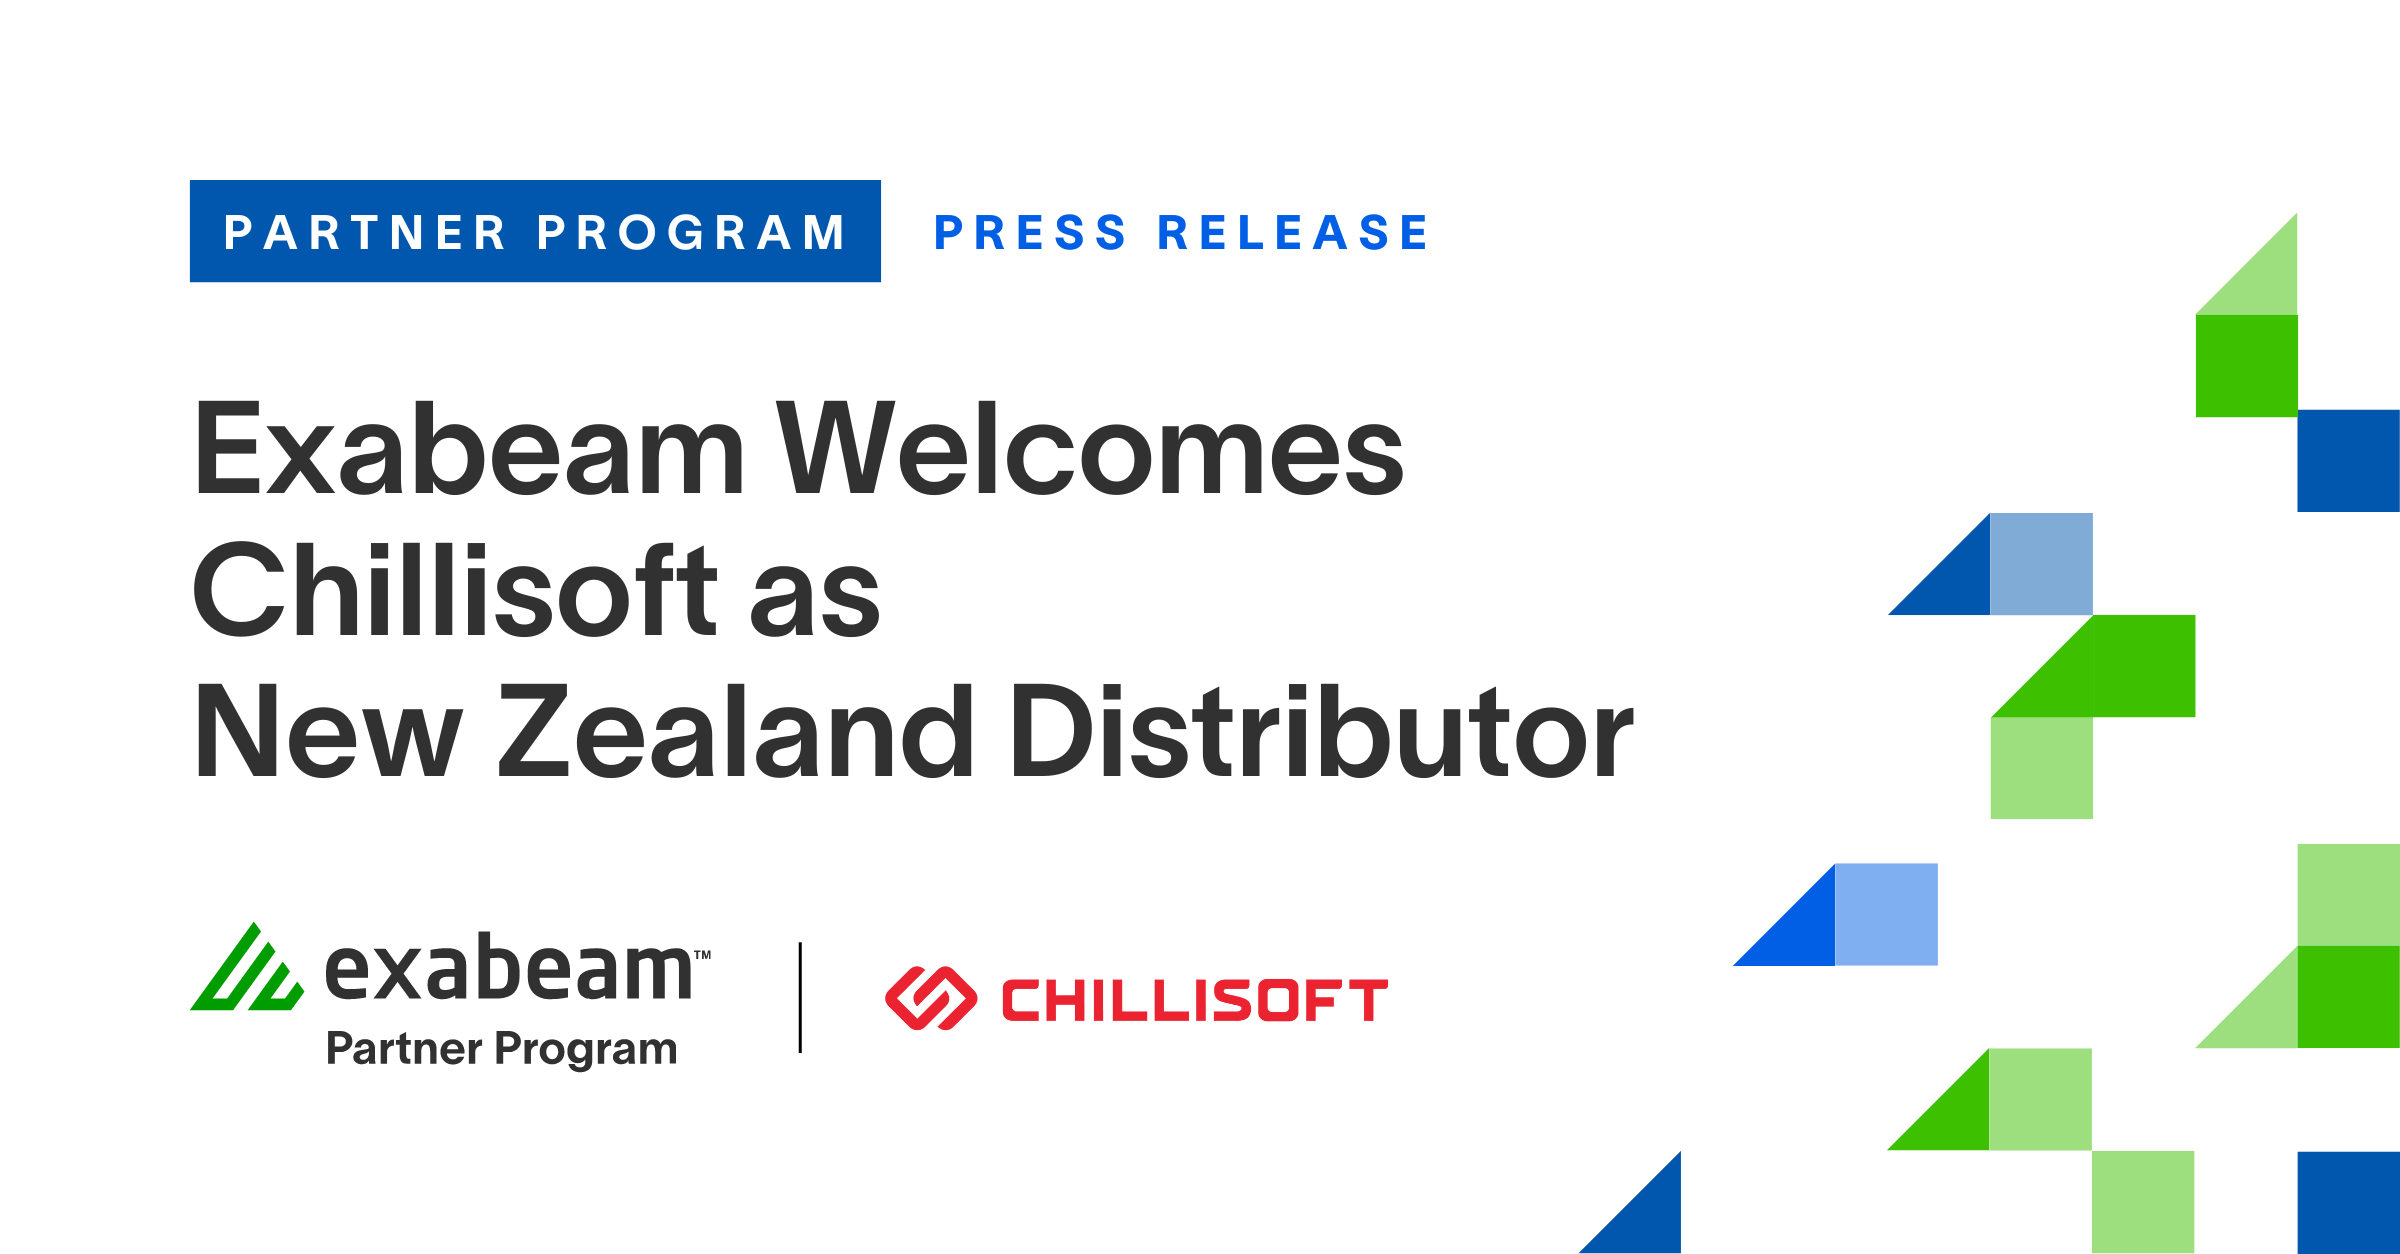 Exabeam Welcomes Chillisoft as New Zealand Distributor